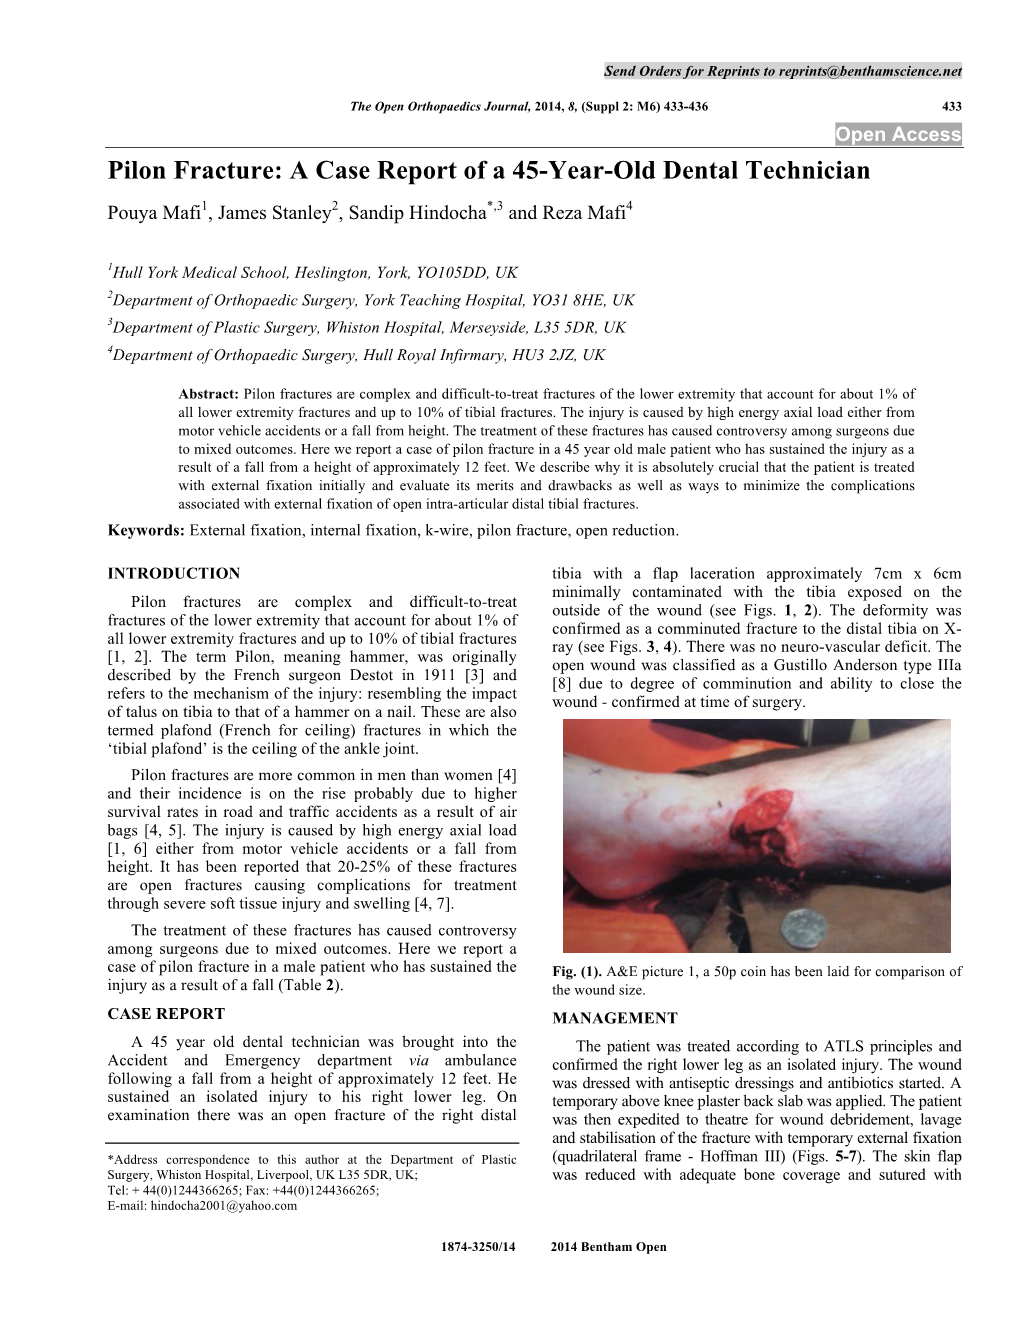 Pilon Fracture: a Case Report of a 45-Year-Old Dental Technician Pouya Mafi1, James Stanley2, Sandip Hindocha*,3 and Reza Mafi4